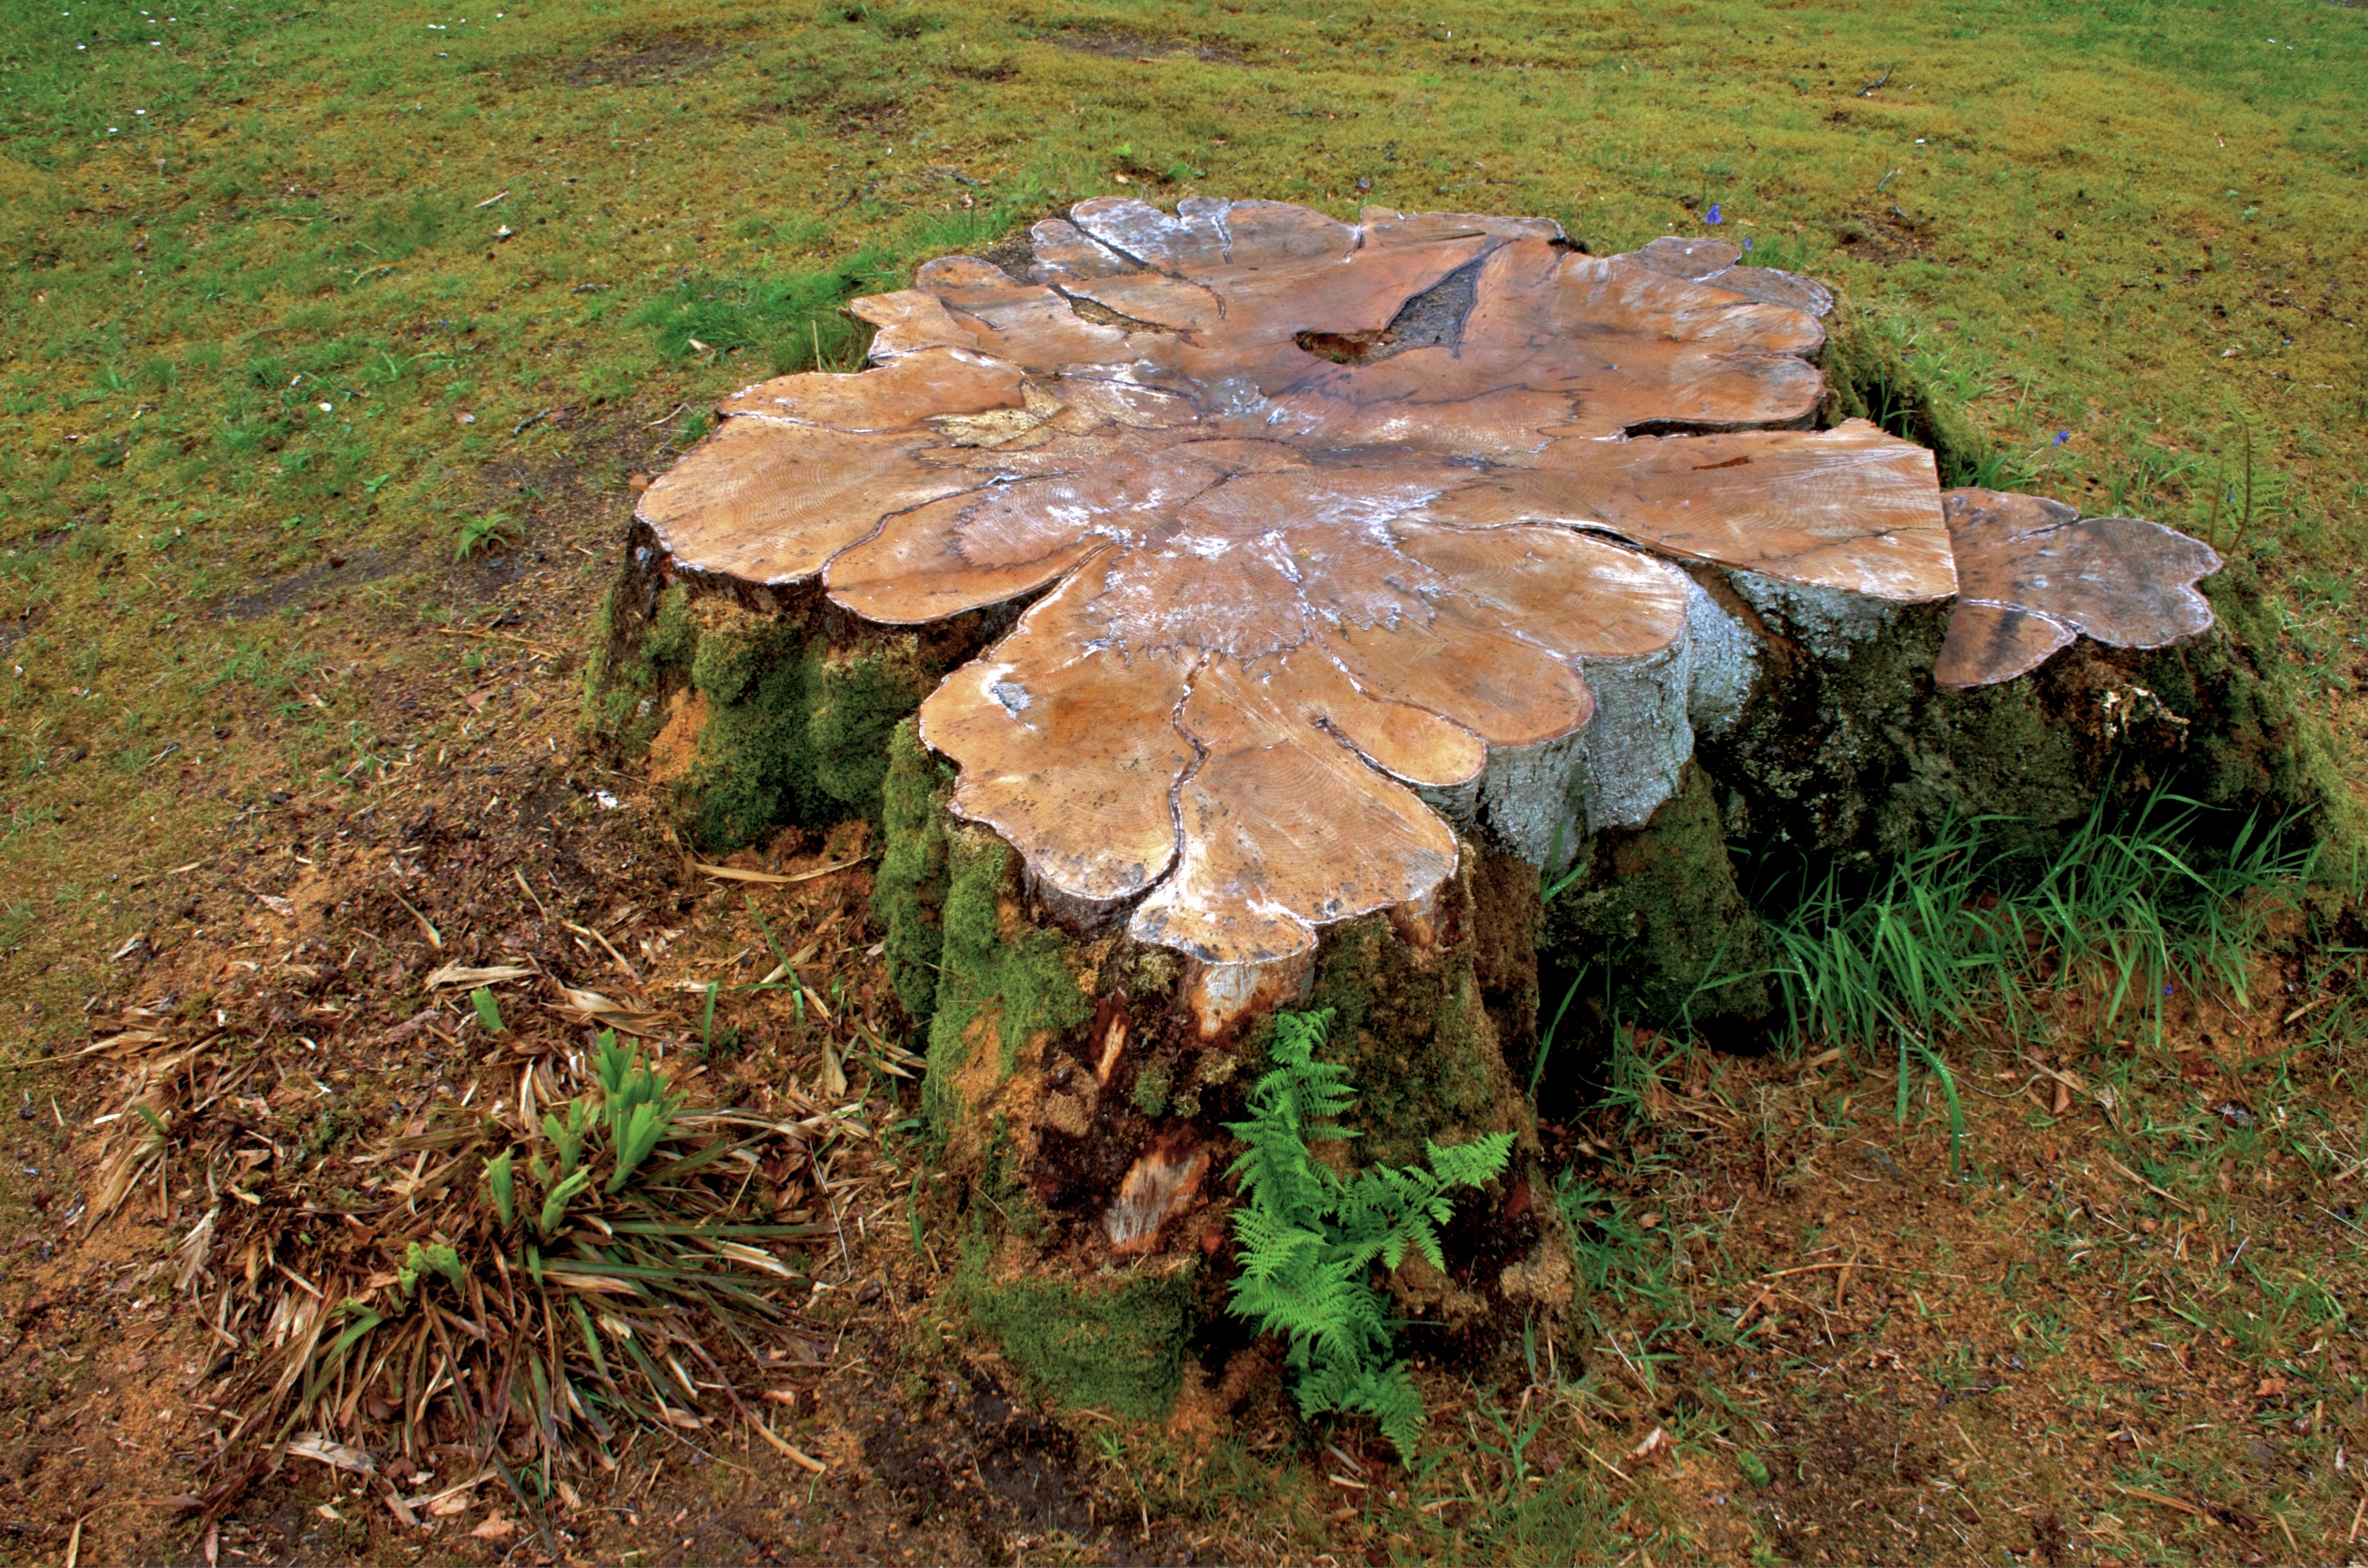 File:Armadale Castle - tree stump.jpg - Wikimedia Commons